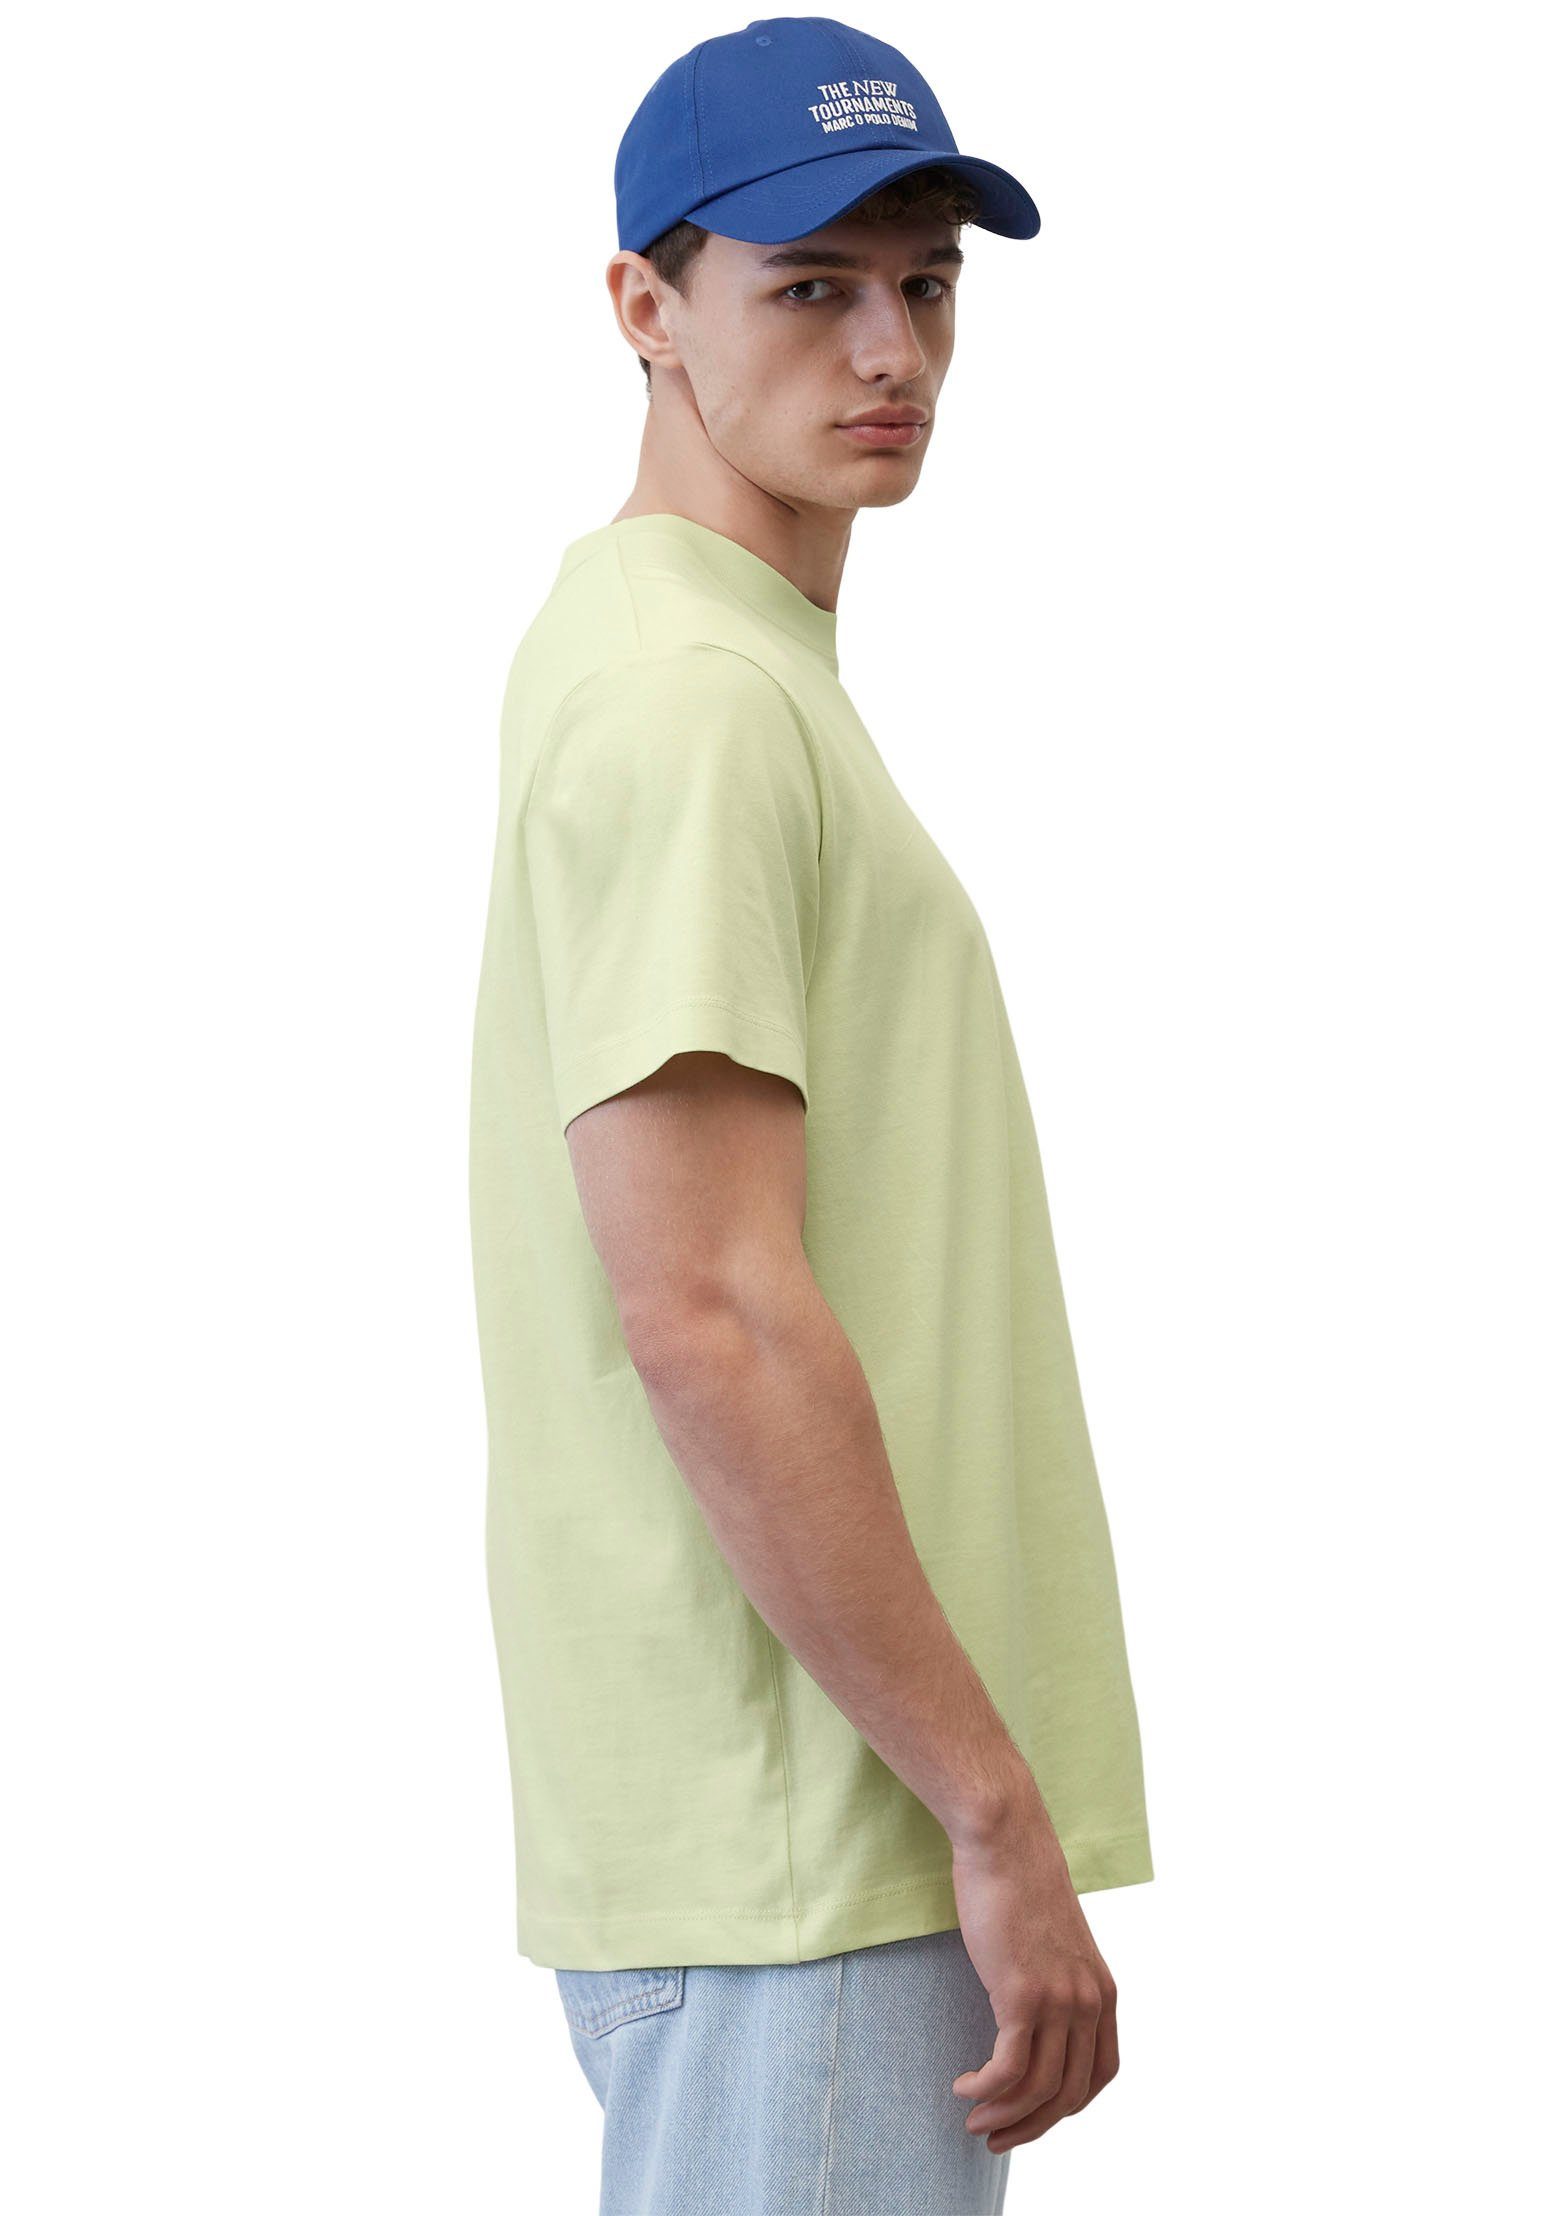 O'Polo Marc Logo-Druck lime DENIM mit kleinem T-Shirt